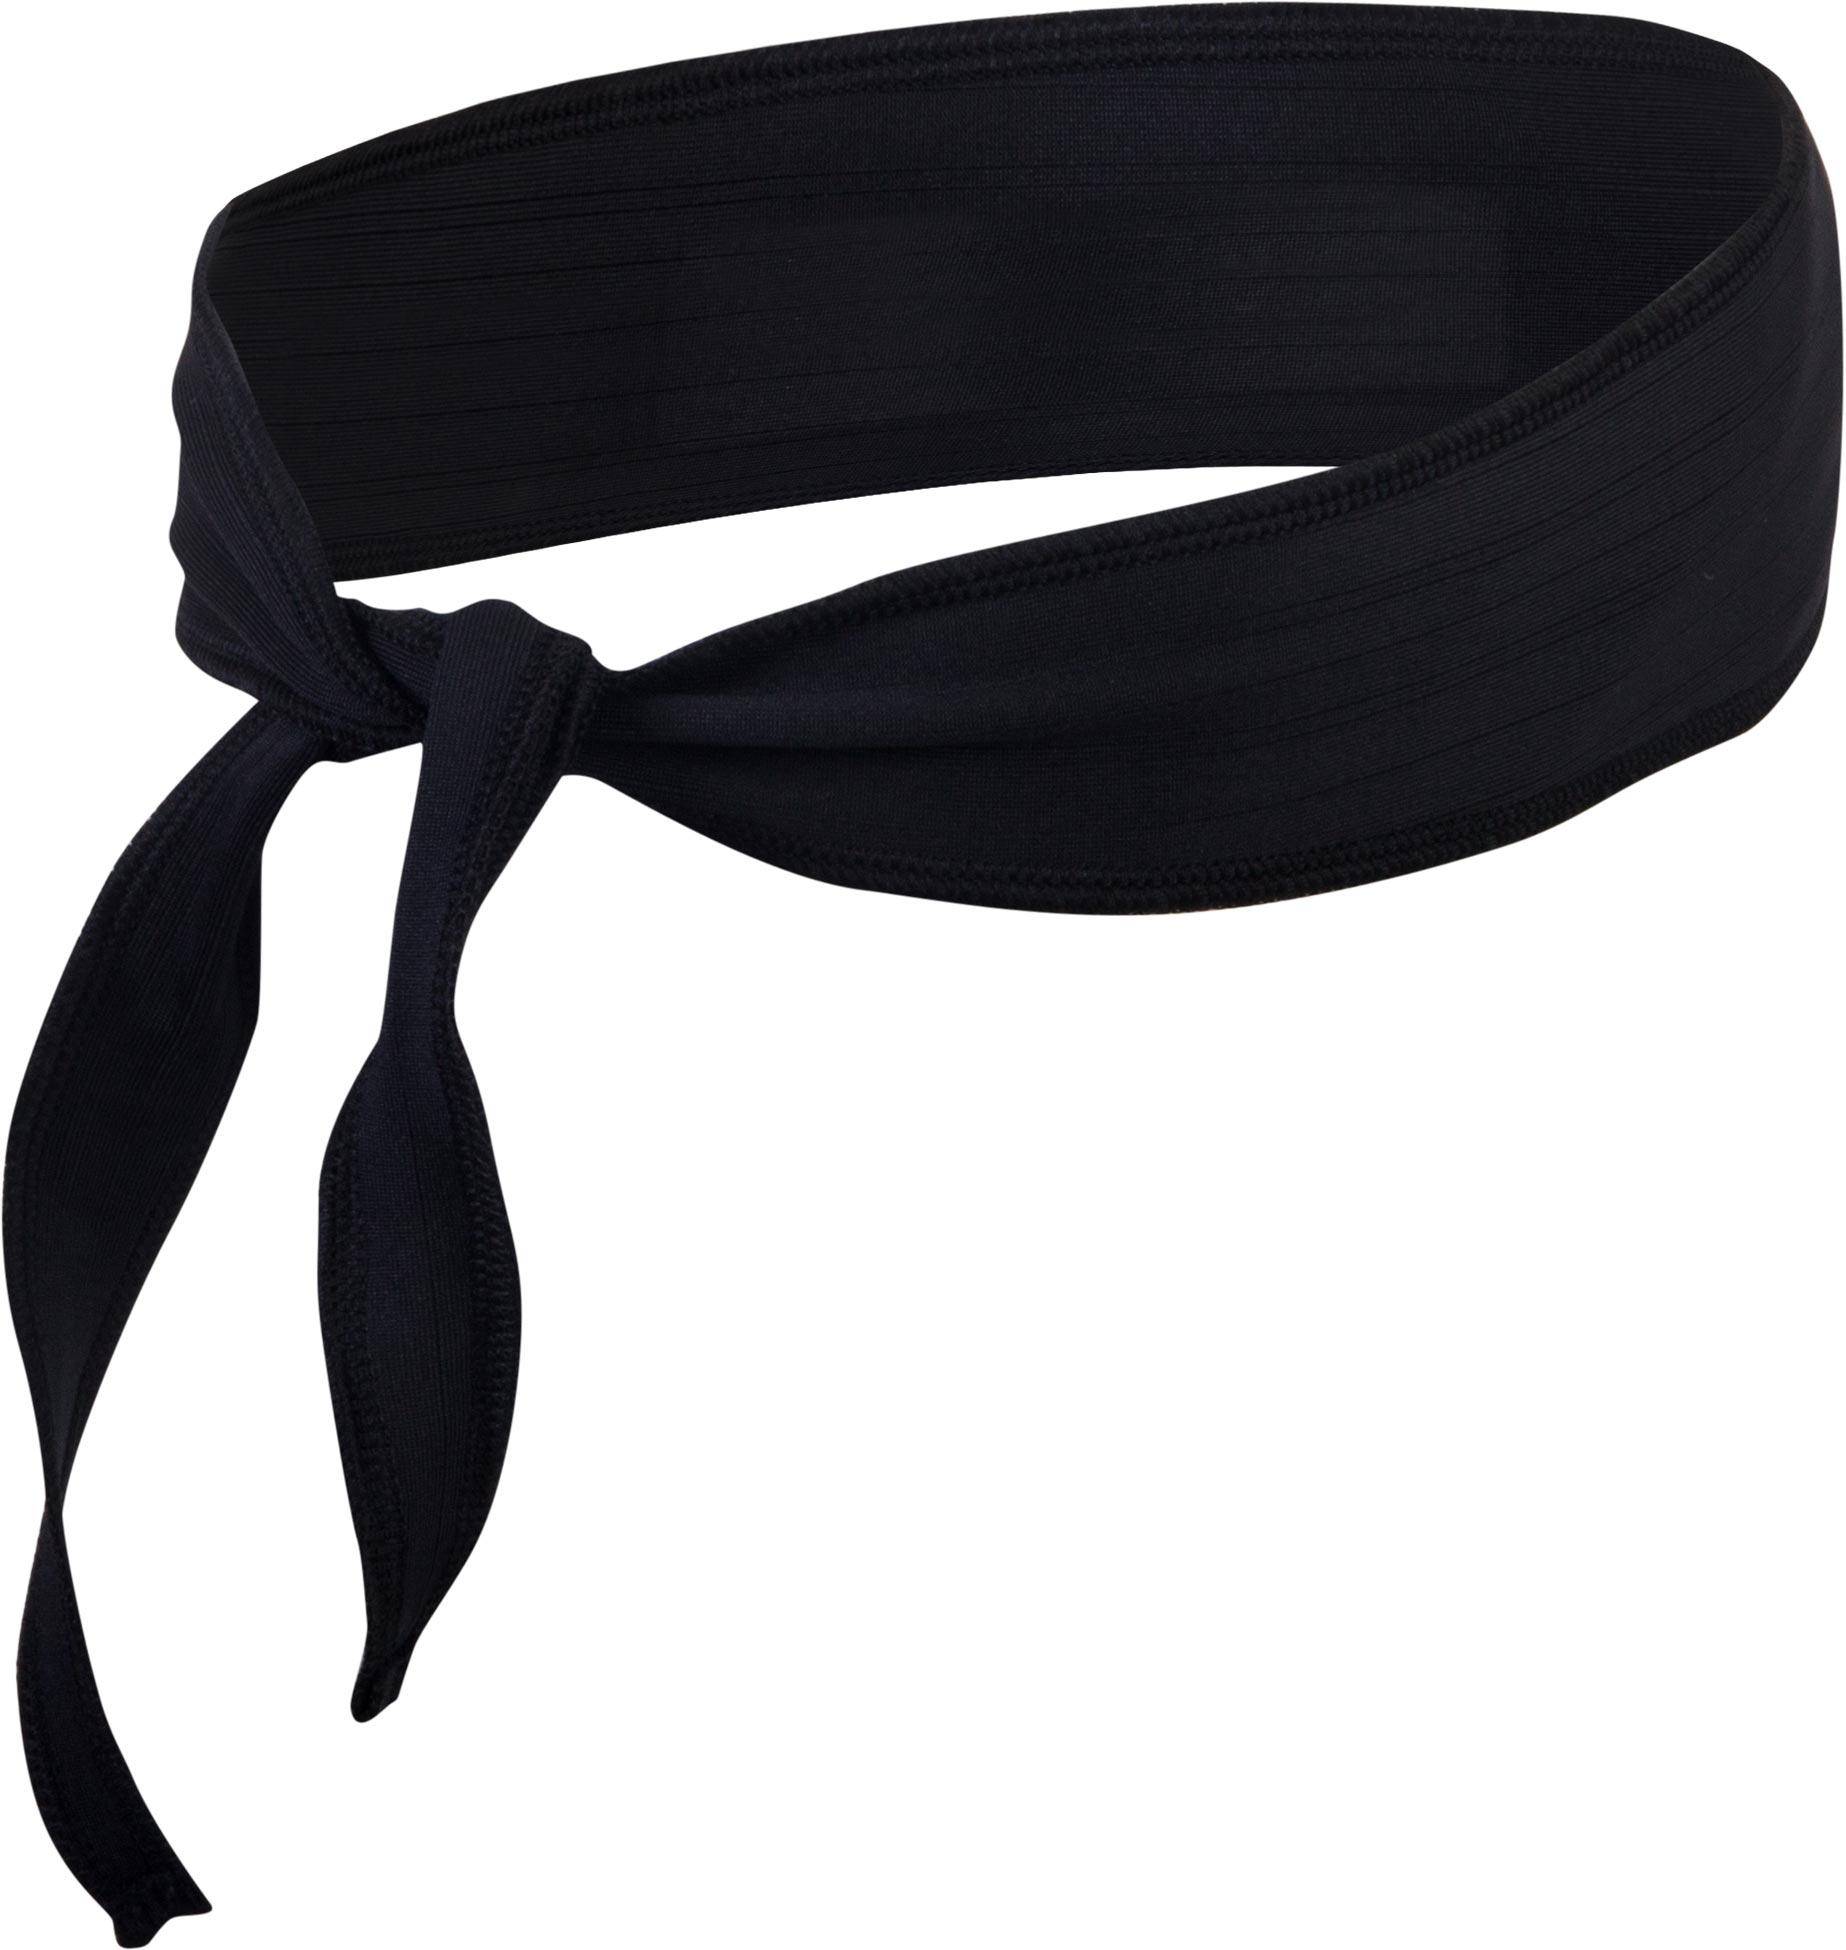 Functional headband